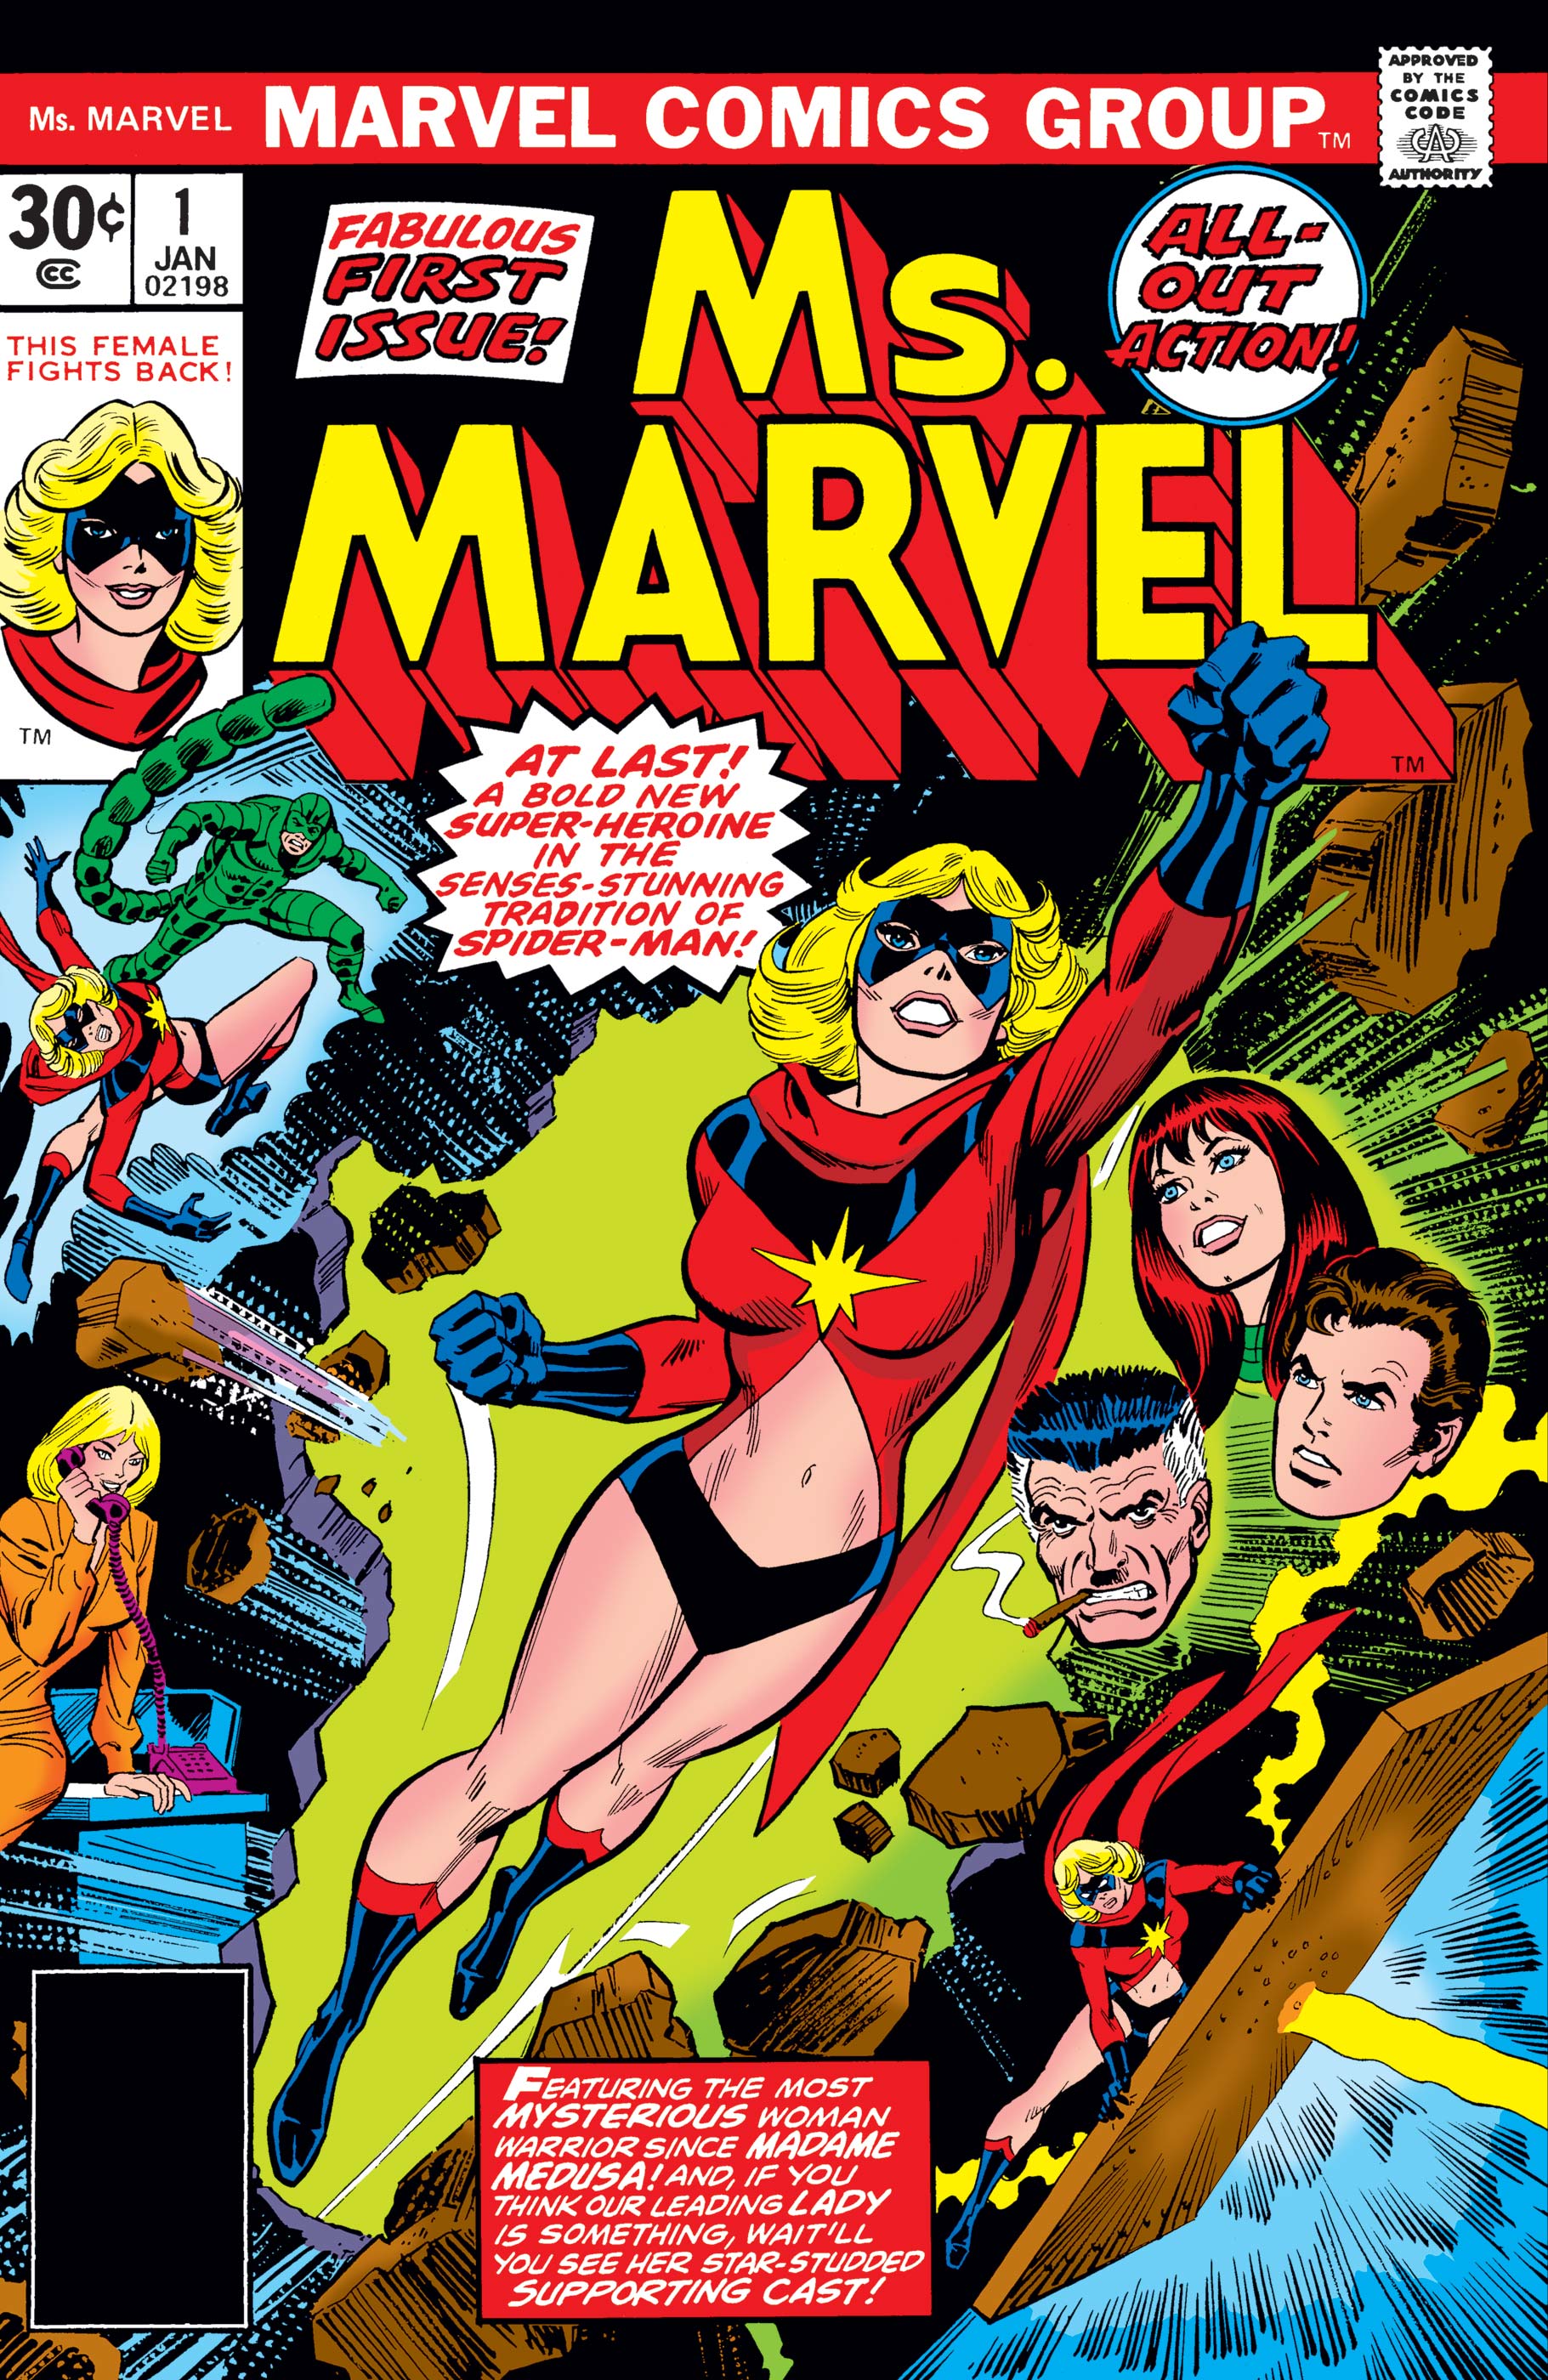 ms.-marvel-comics-ms.-marvel-comics2.jpeg